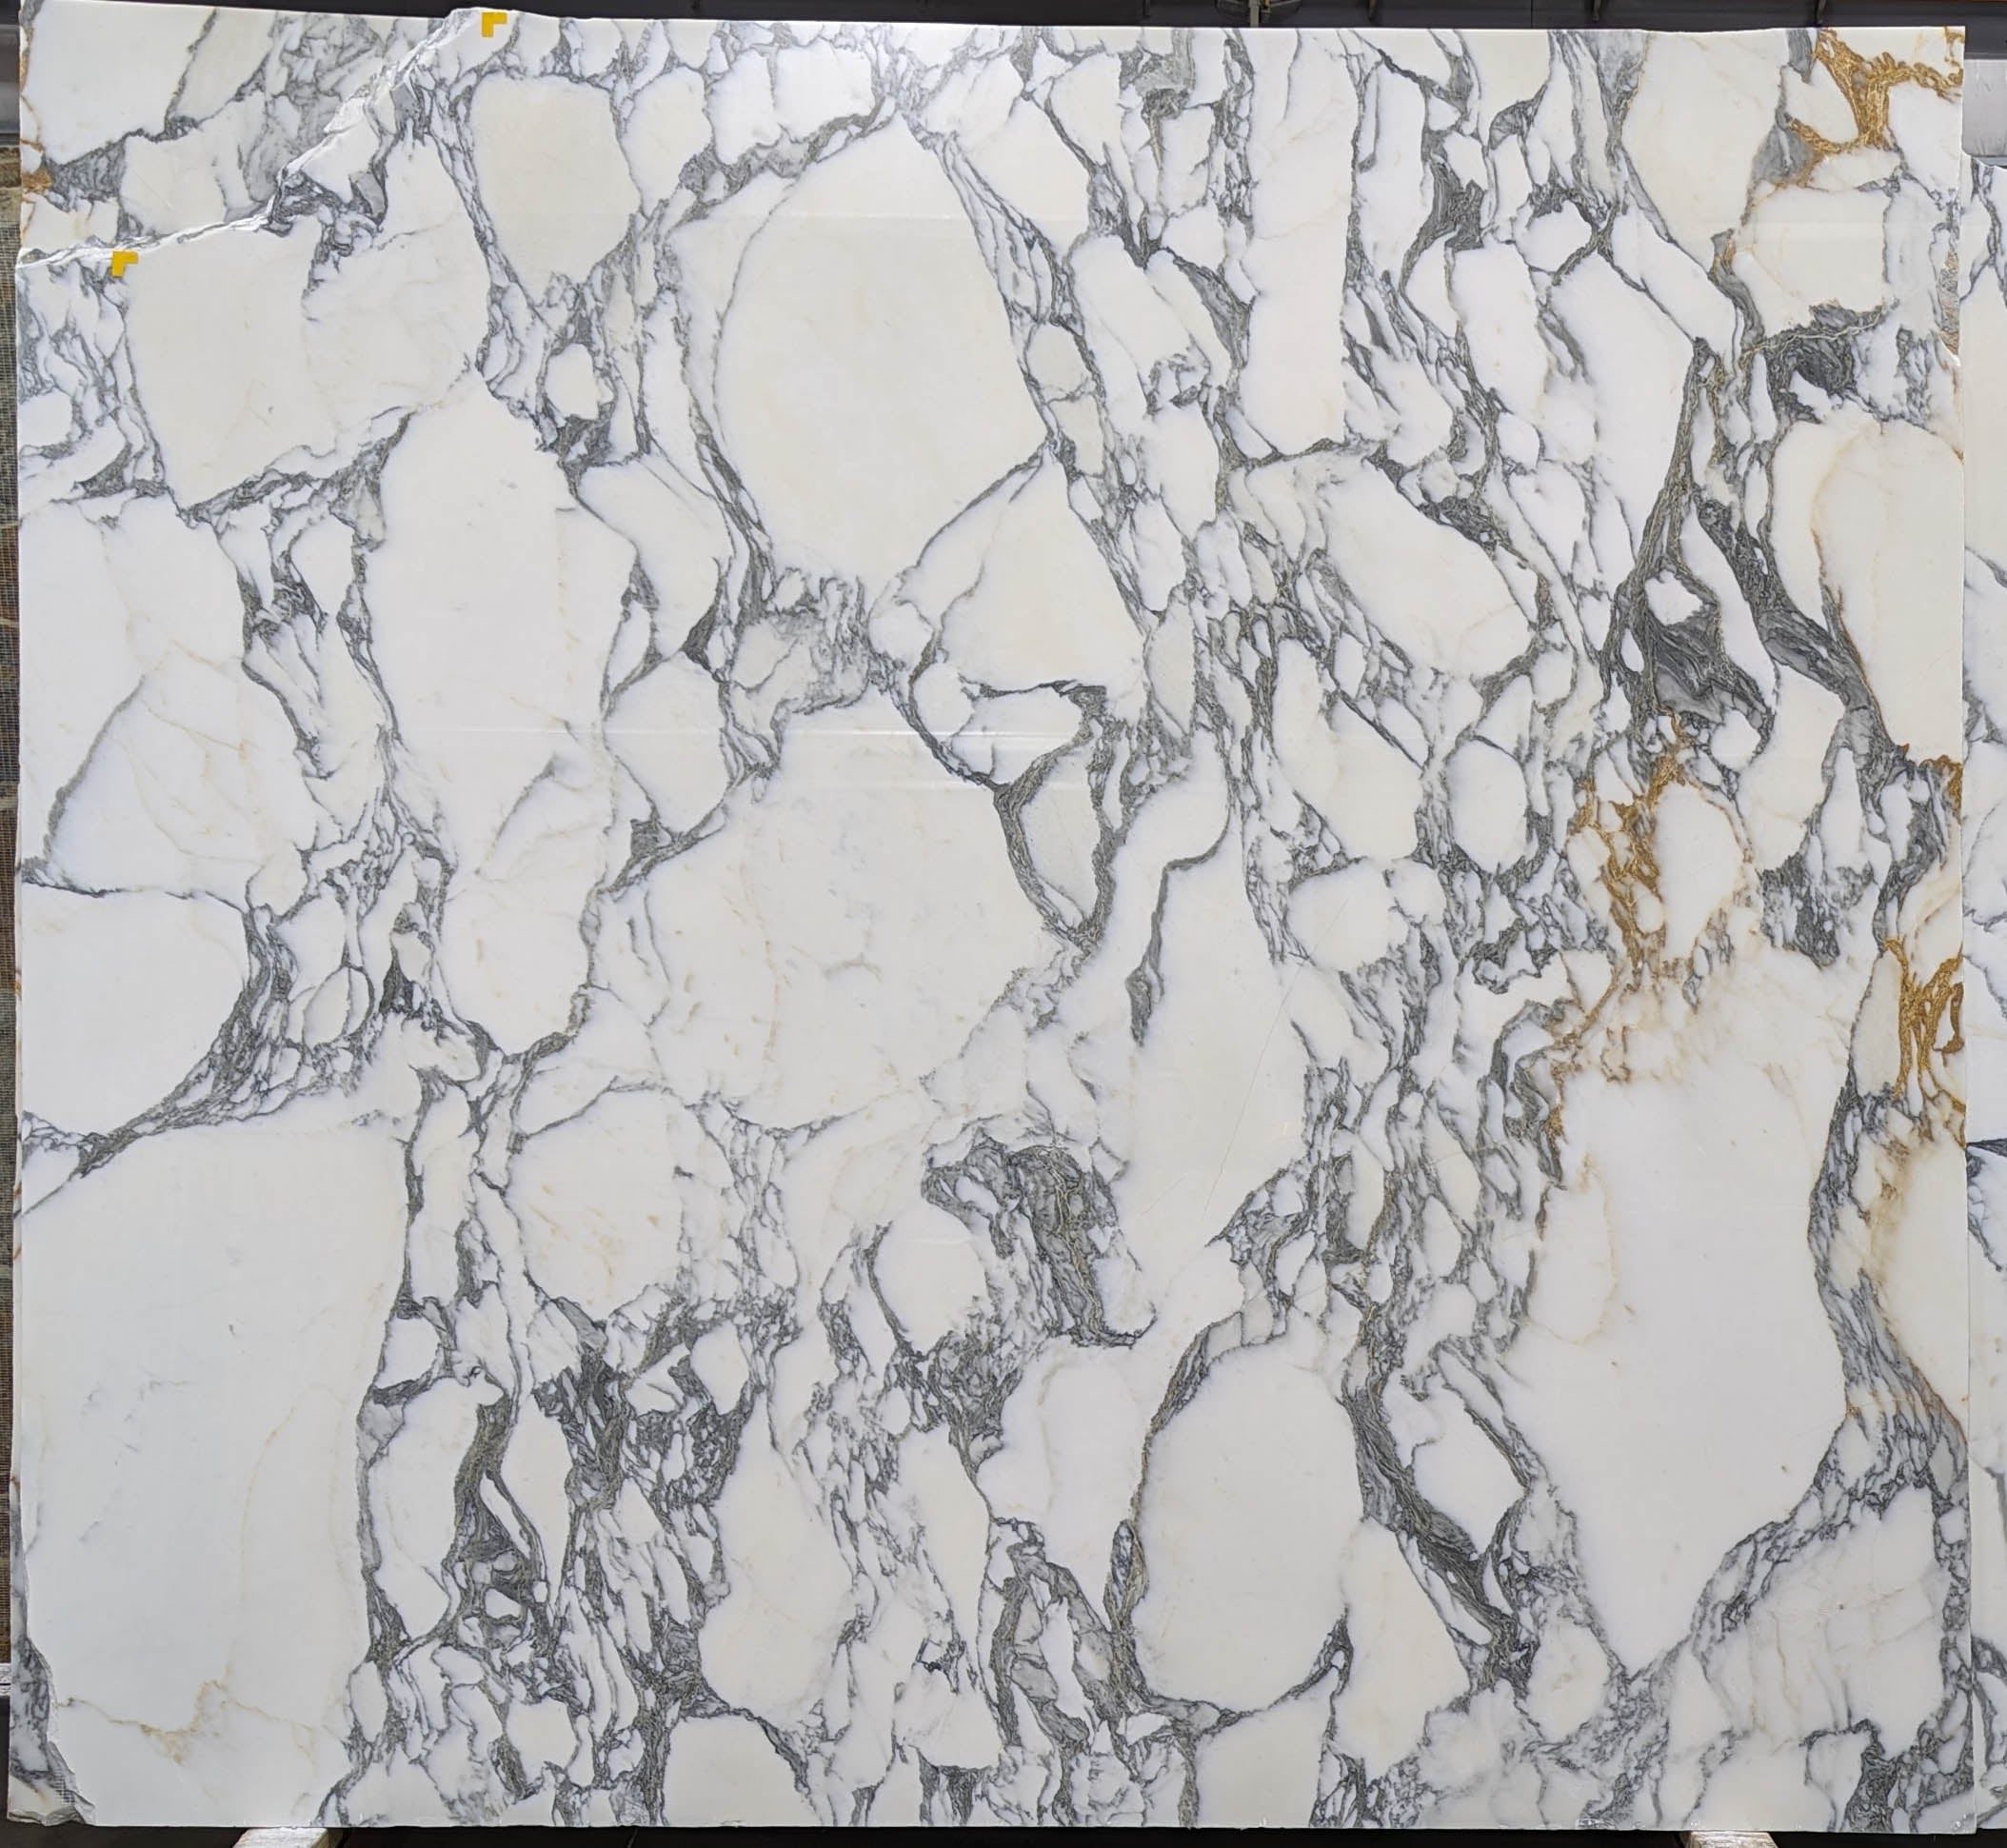  Arabescato Corchia A1 Select Marble Slab 3/4 - 28698#67 -  69x83 